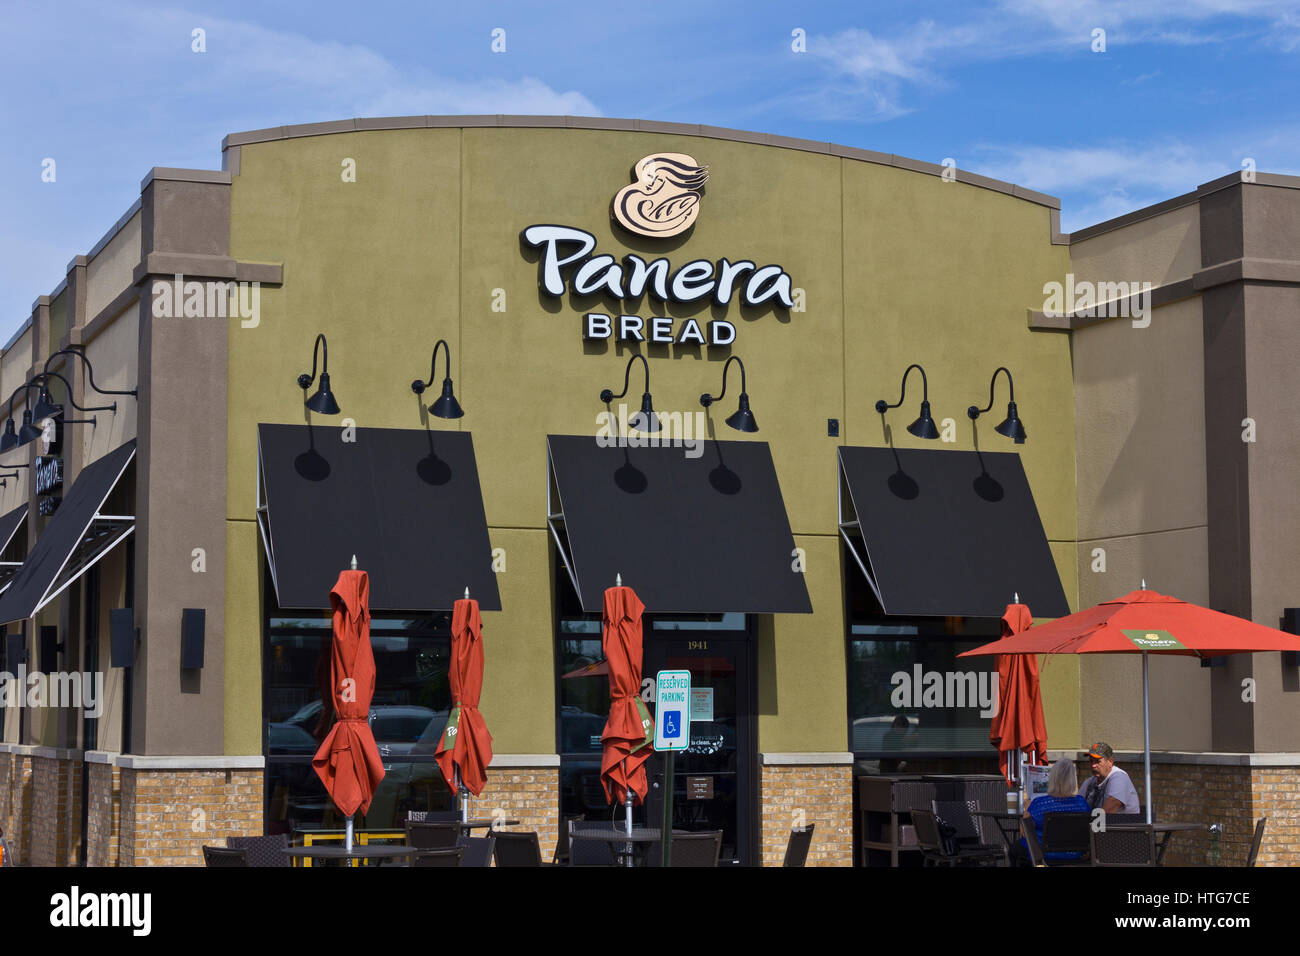 Panera Bread Restaurant Exterior and Trademark Logo Editorial Stock Photo -  Image of june, sign: 282425618